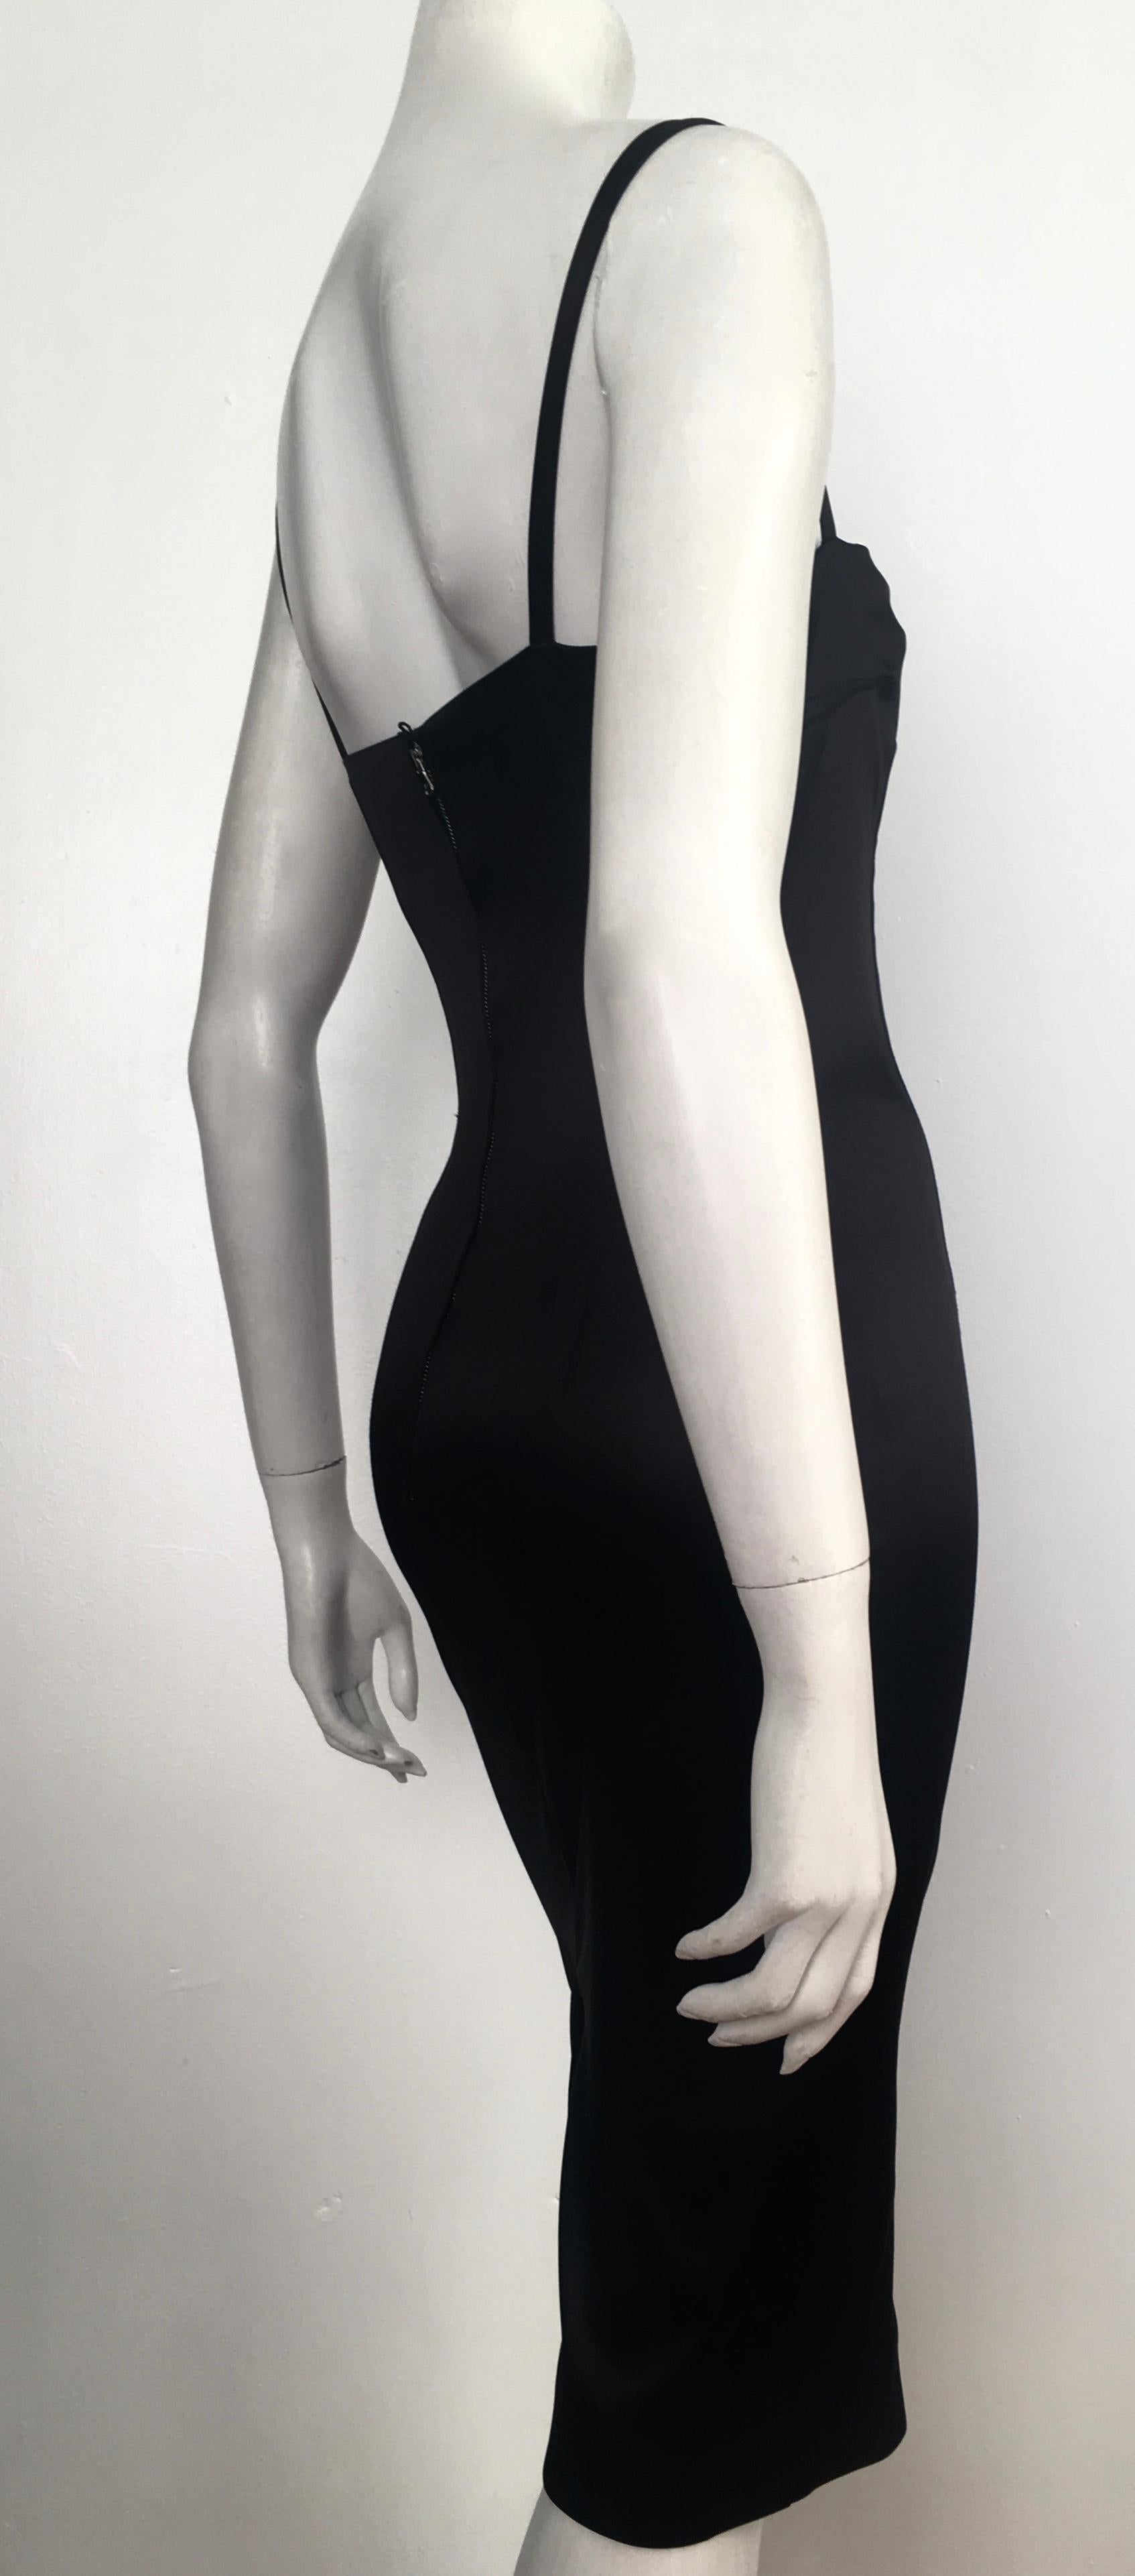 Women's or Men's Dolce & Gabbana 1990s Black Stretchy Sexy Cocktail Dress Size 4.